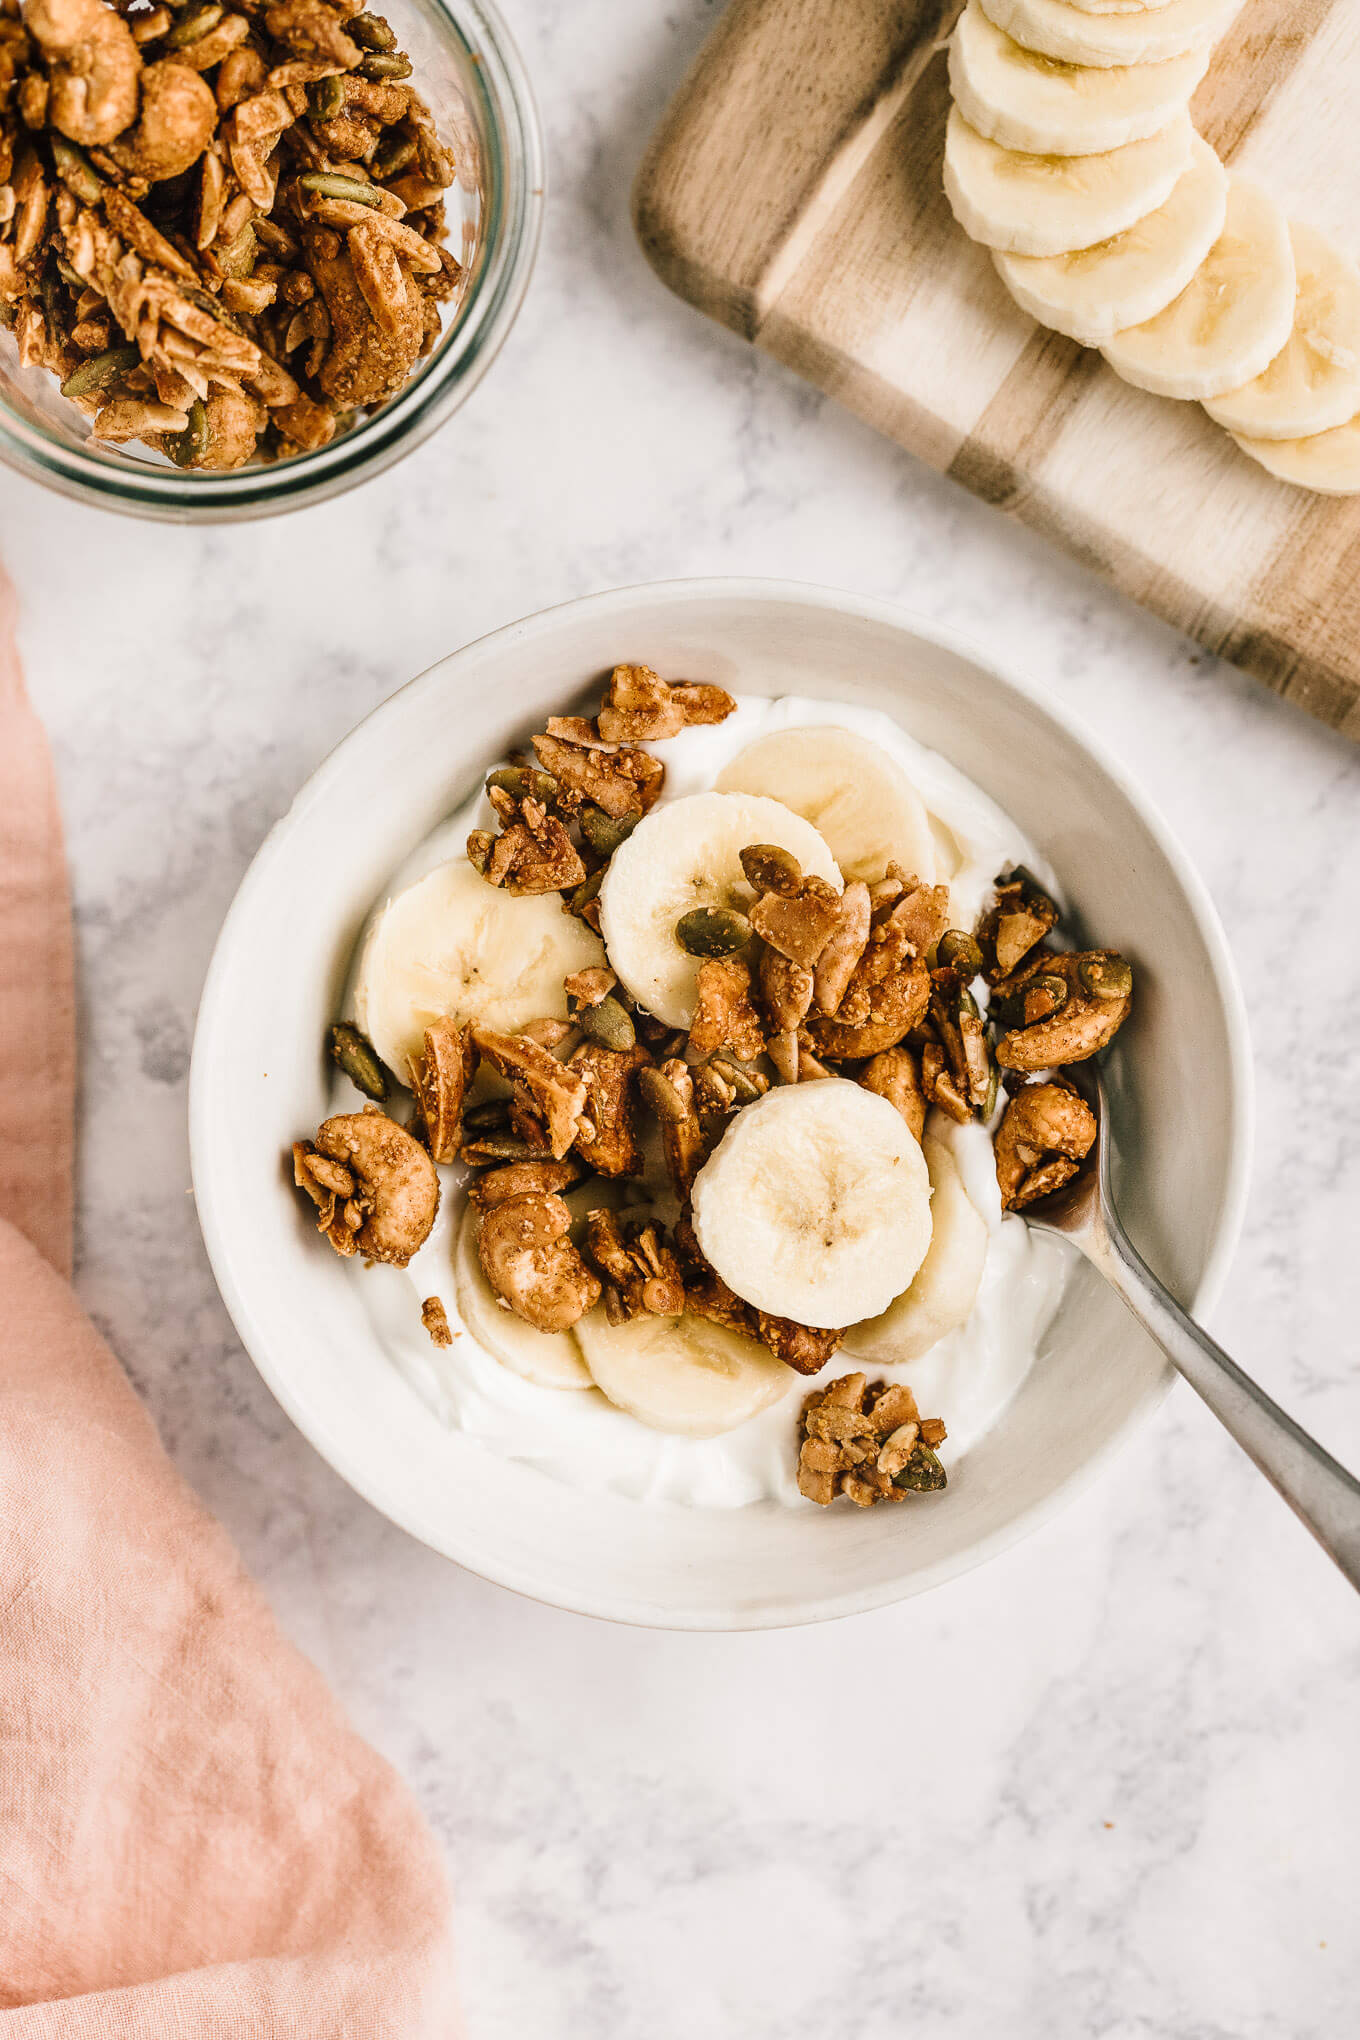 yogurt topped with paleo grain-free granola and bananas